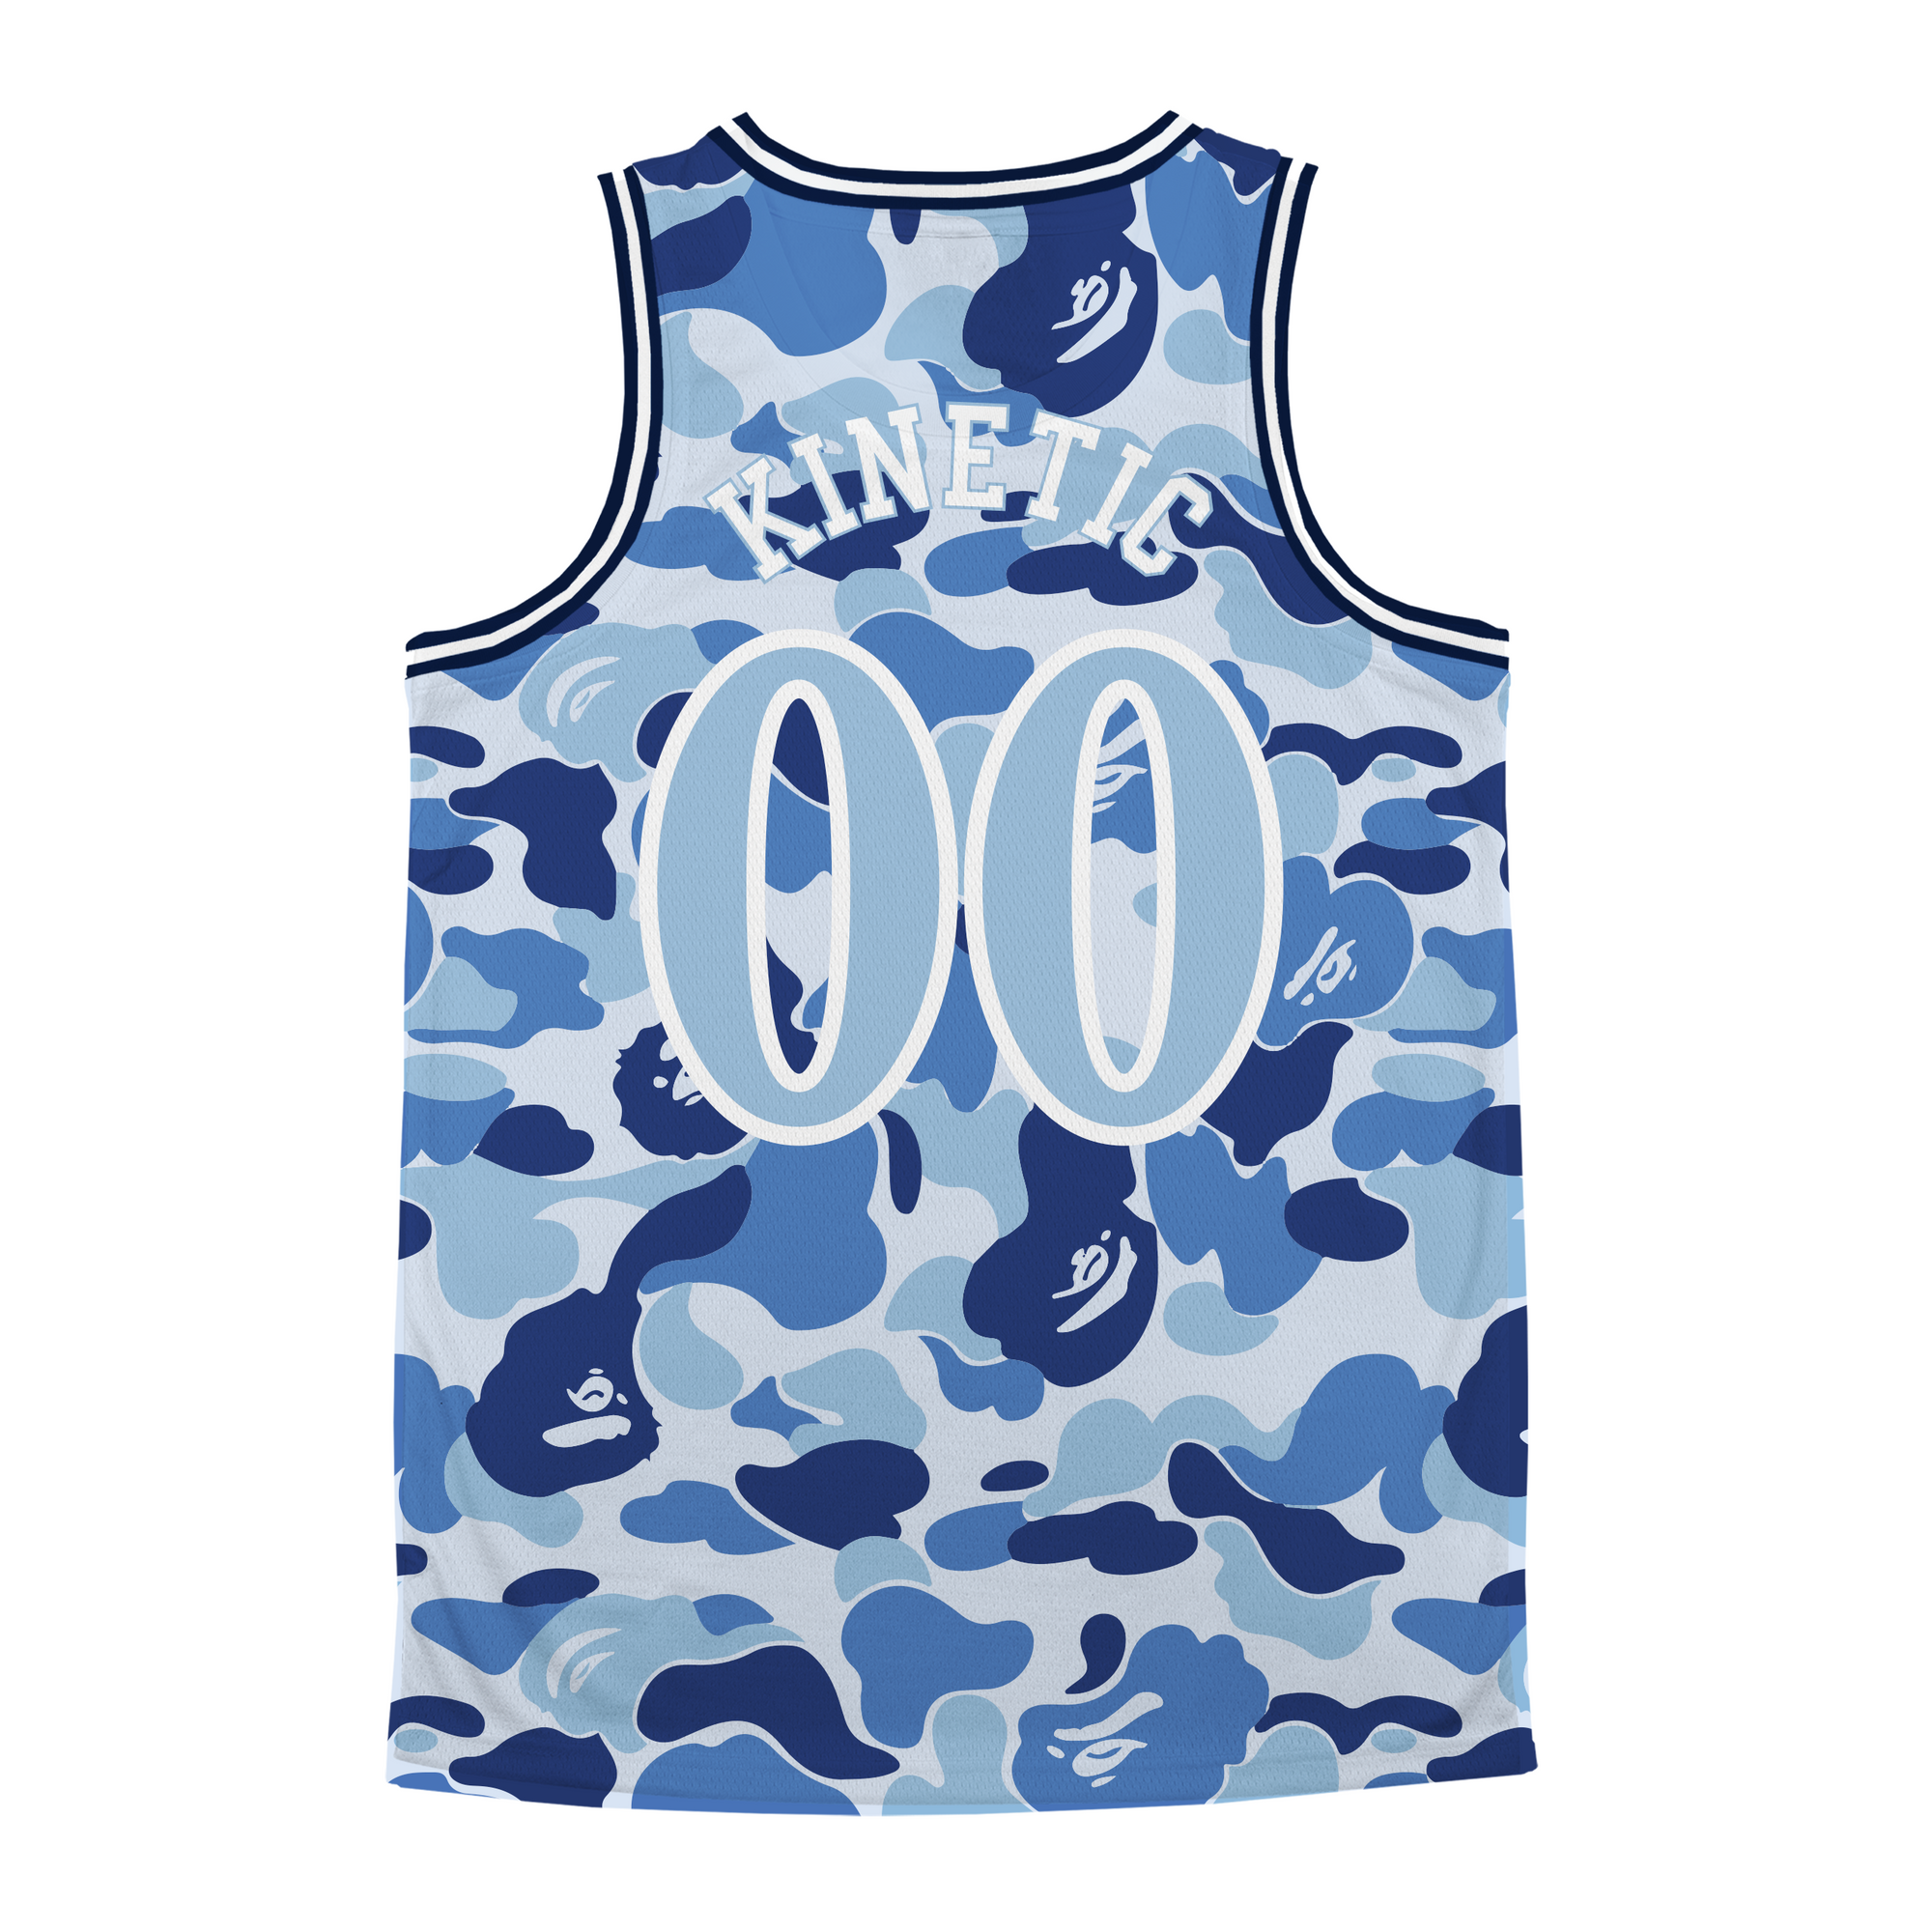 Pi Kappa Alpha - Blue Camo Basketball Jersey